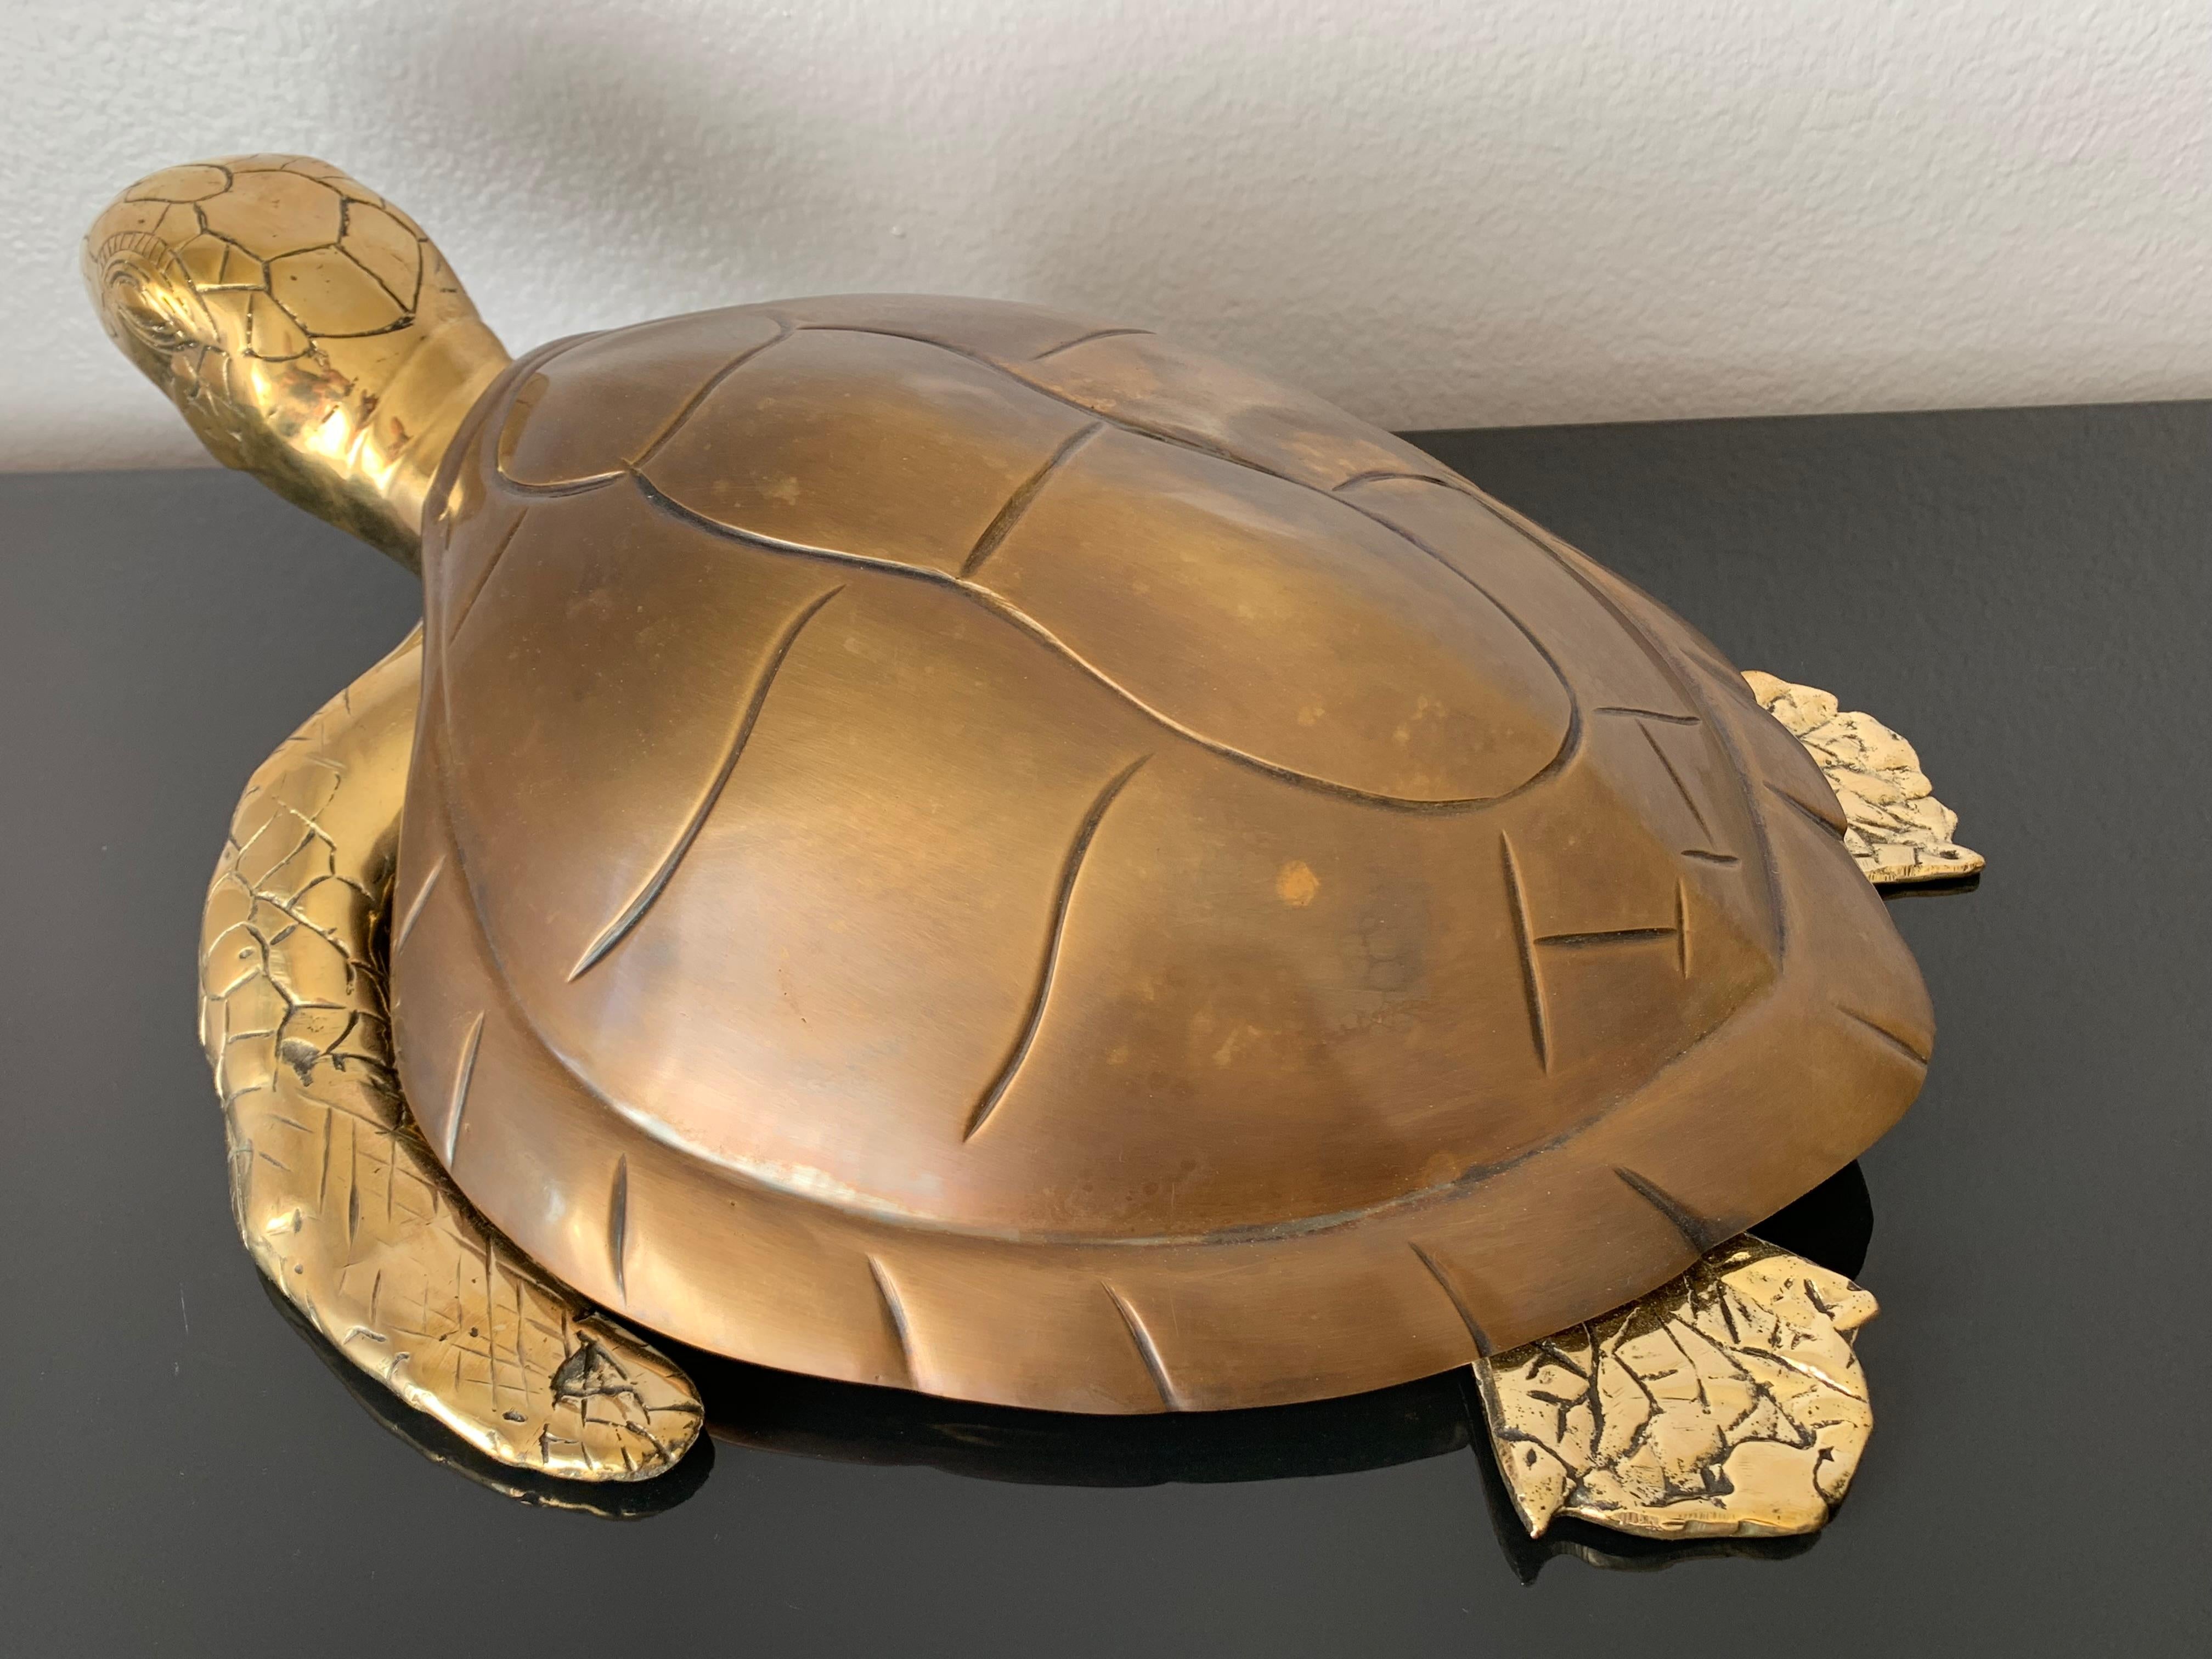 Brass turtle jewelry box or decorative sculpture.